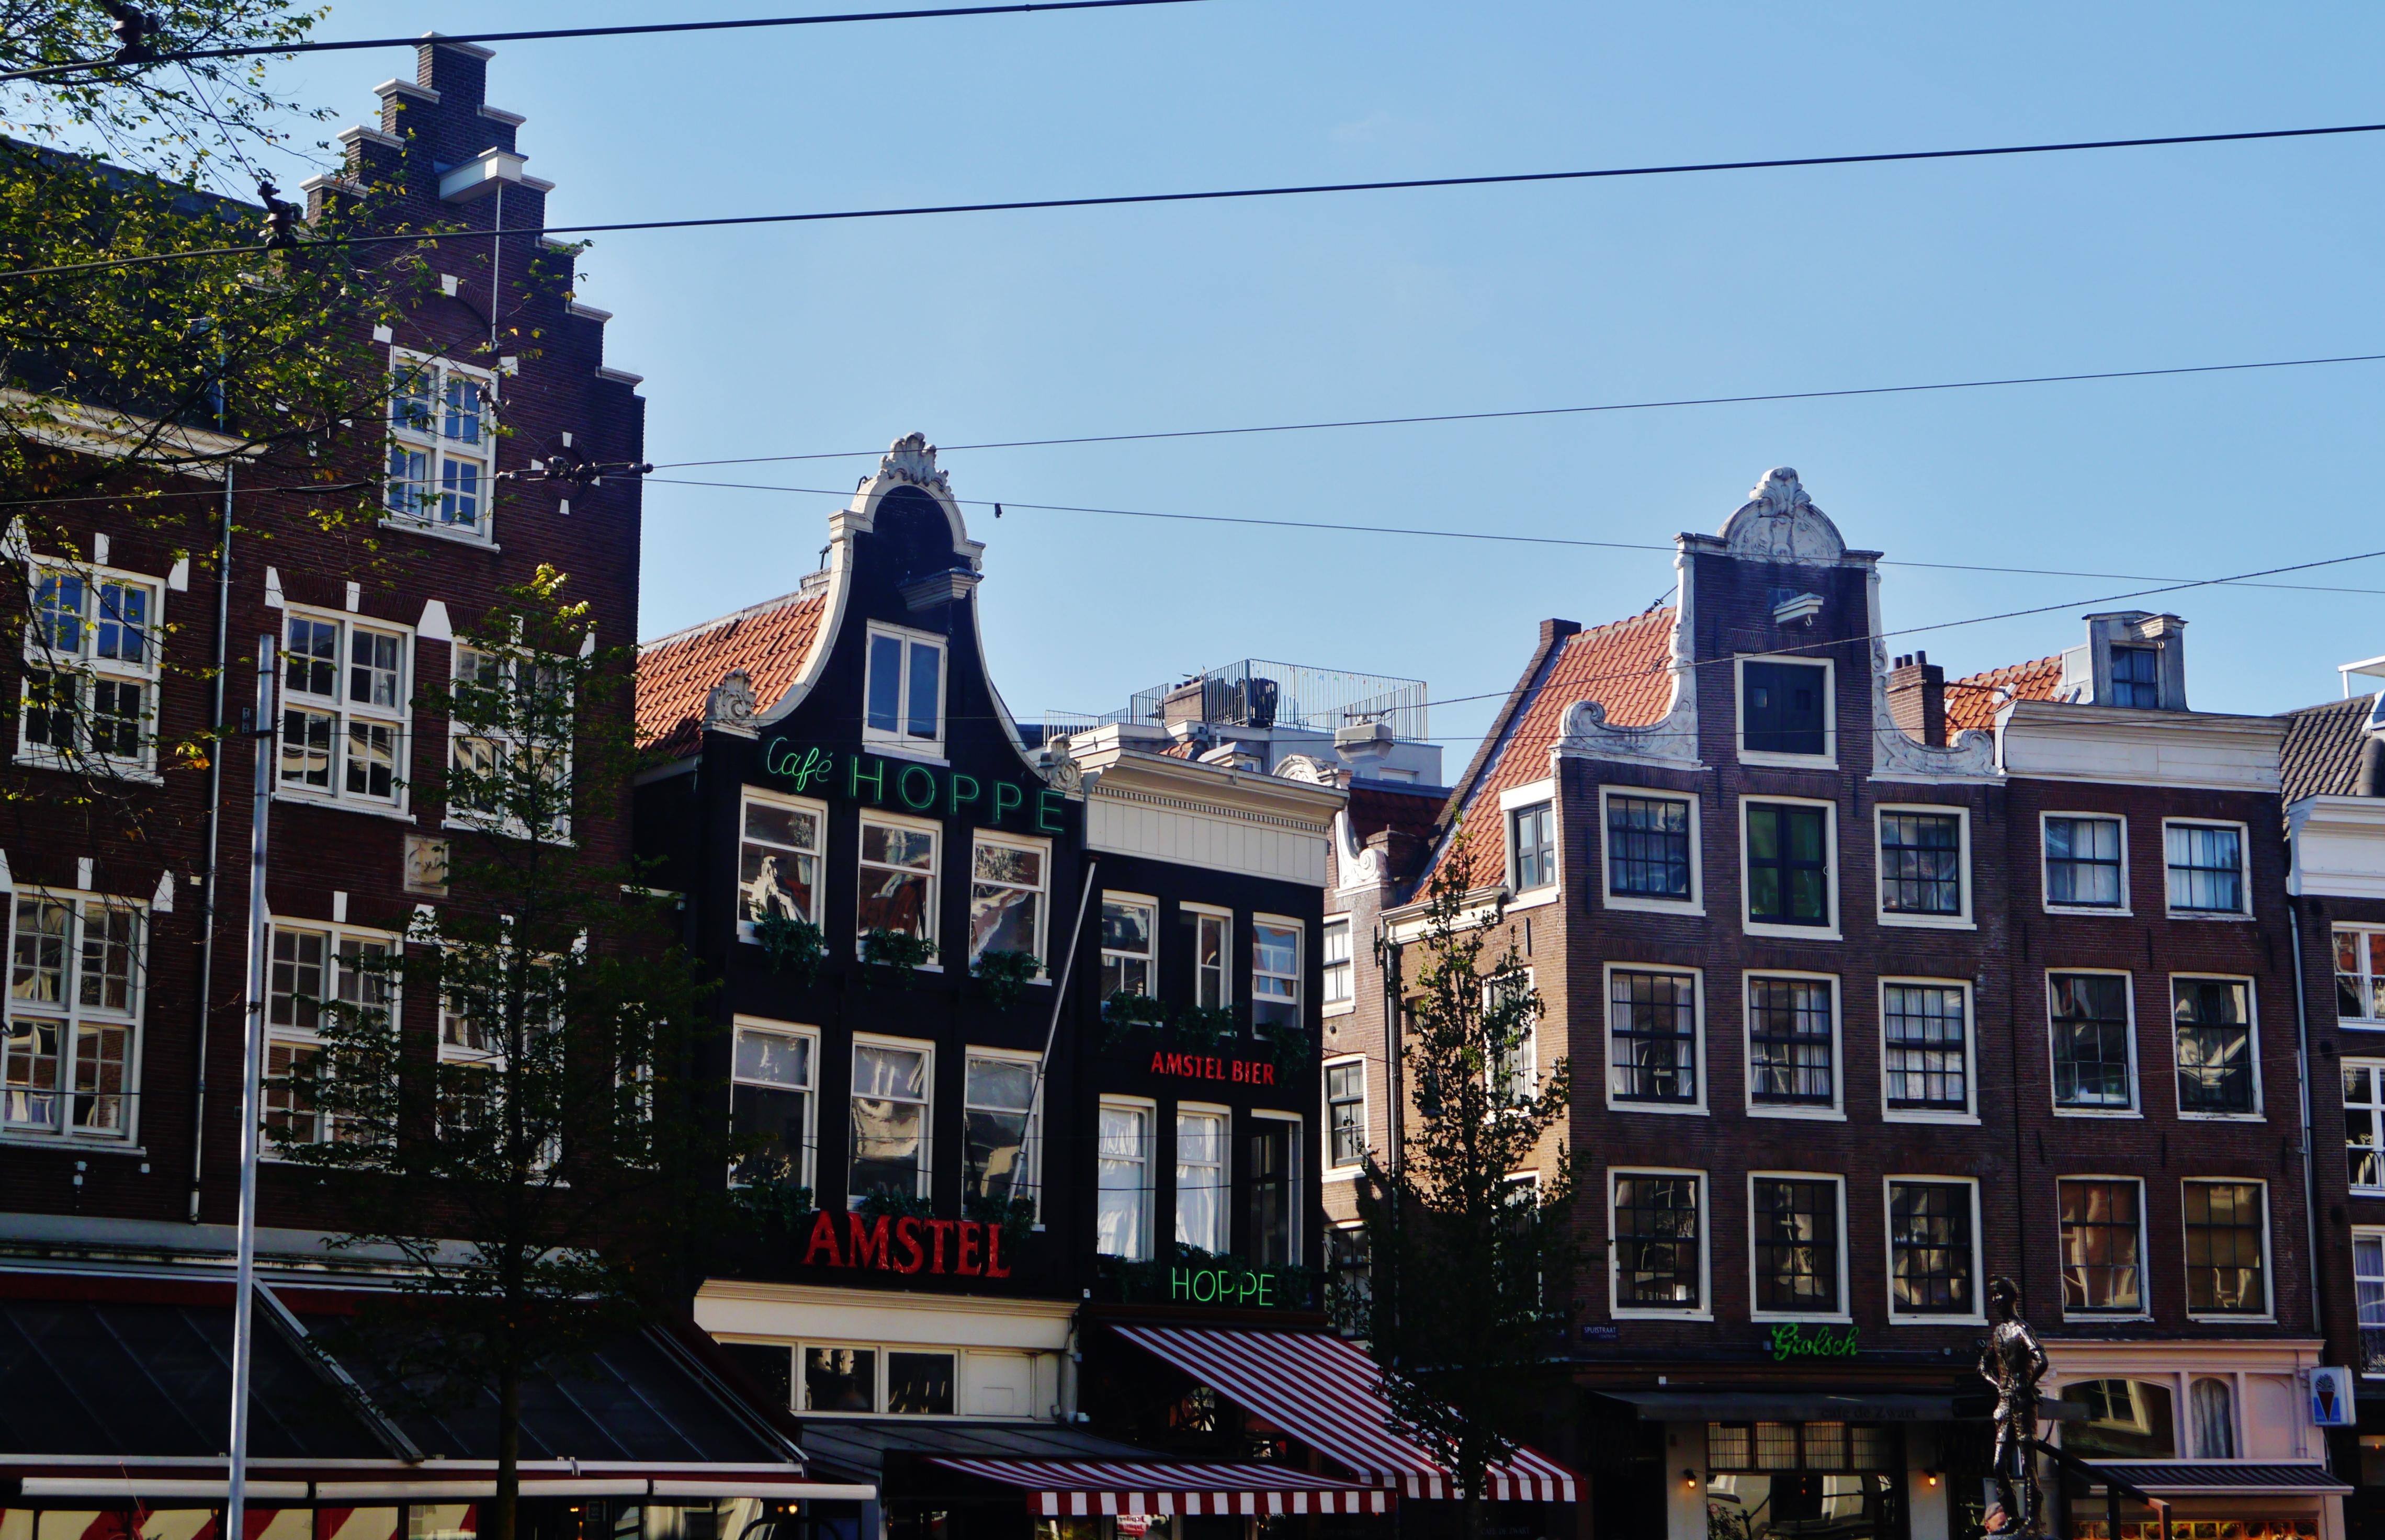 Rubriek Inwoner Verder File:Amsterdam Spui 4.jpg - Wikimedia Commons